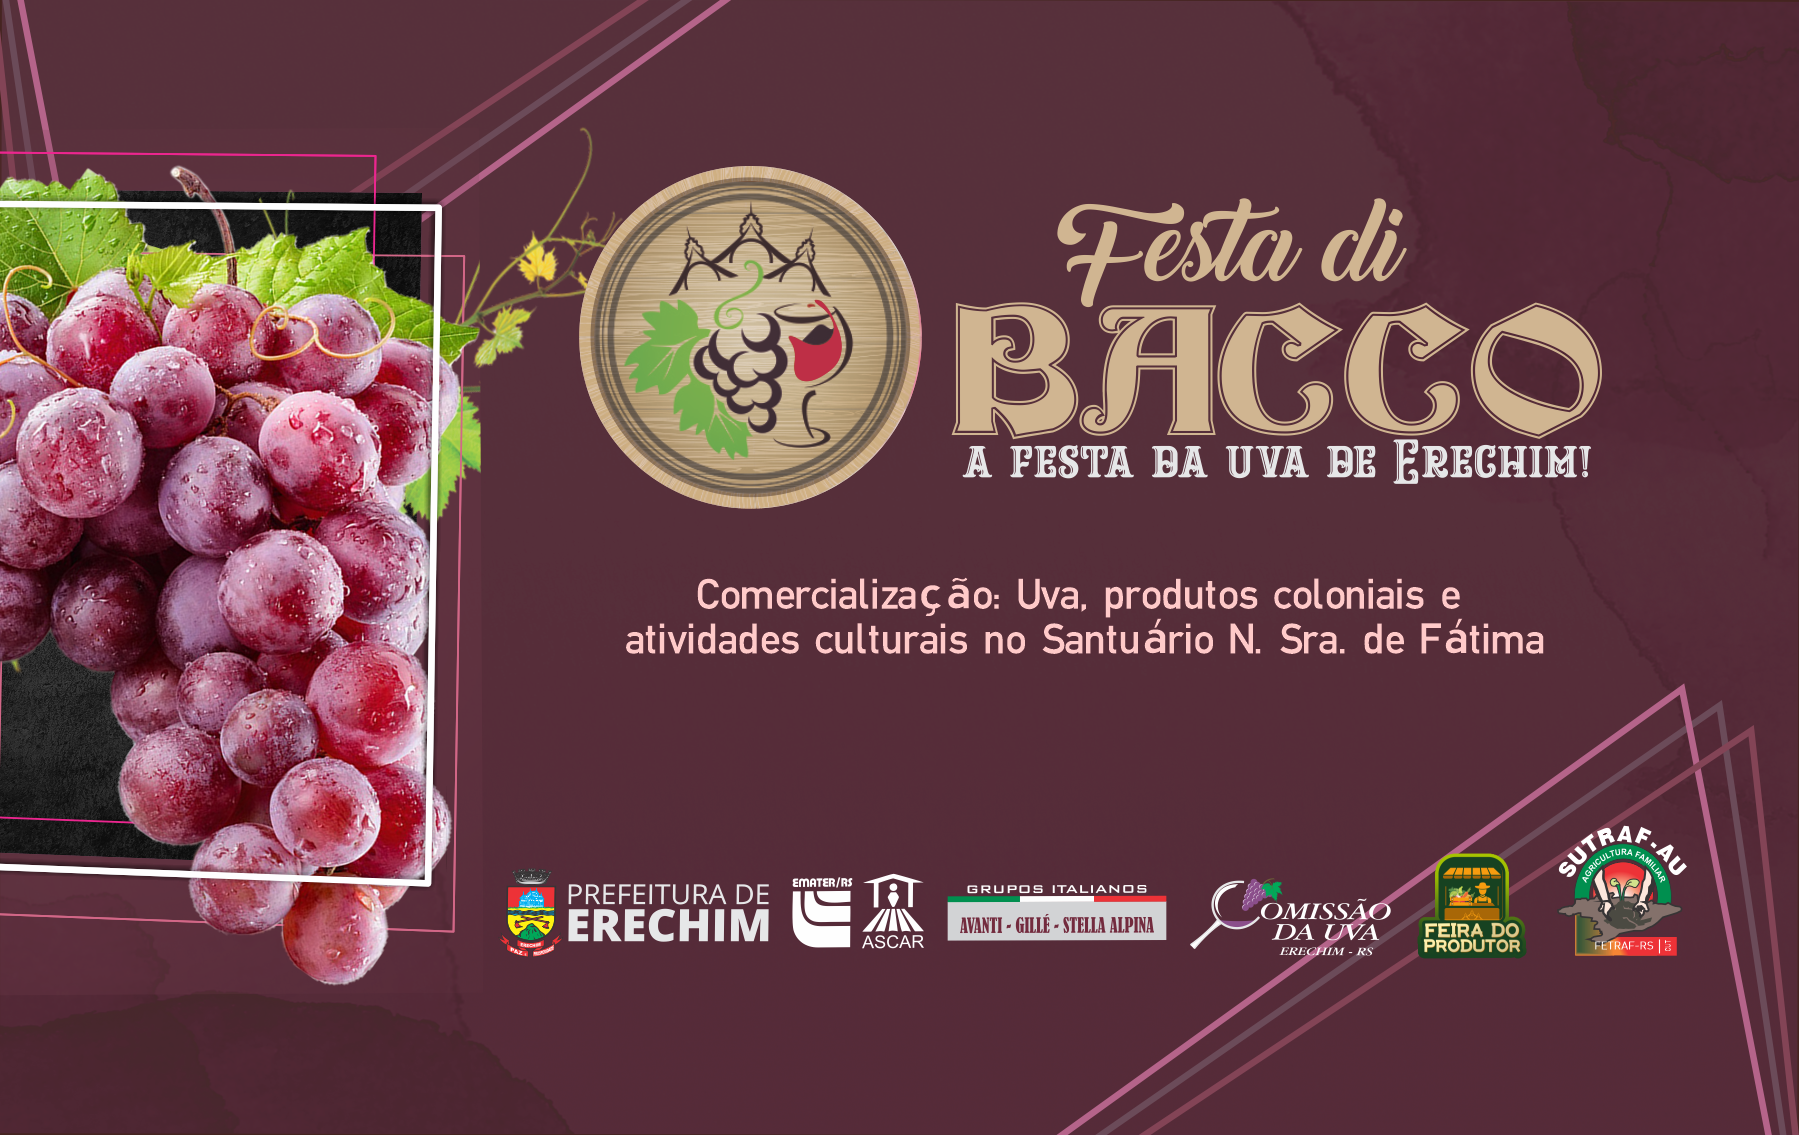 Festa Di Bacco 2022 a festa da uva de Erechim